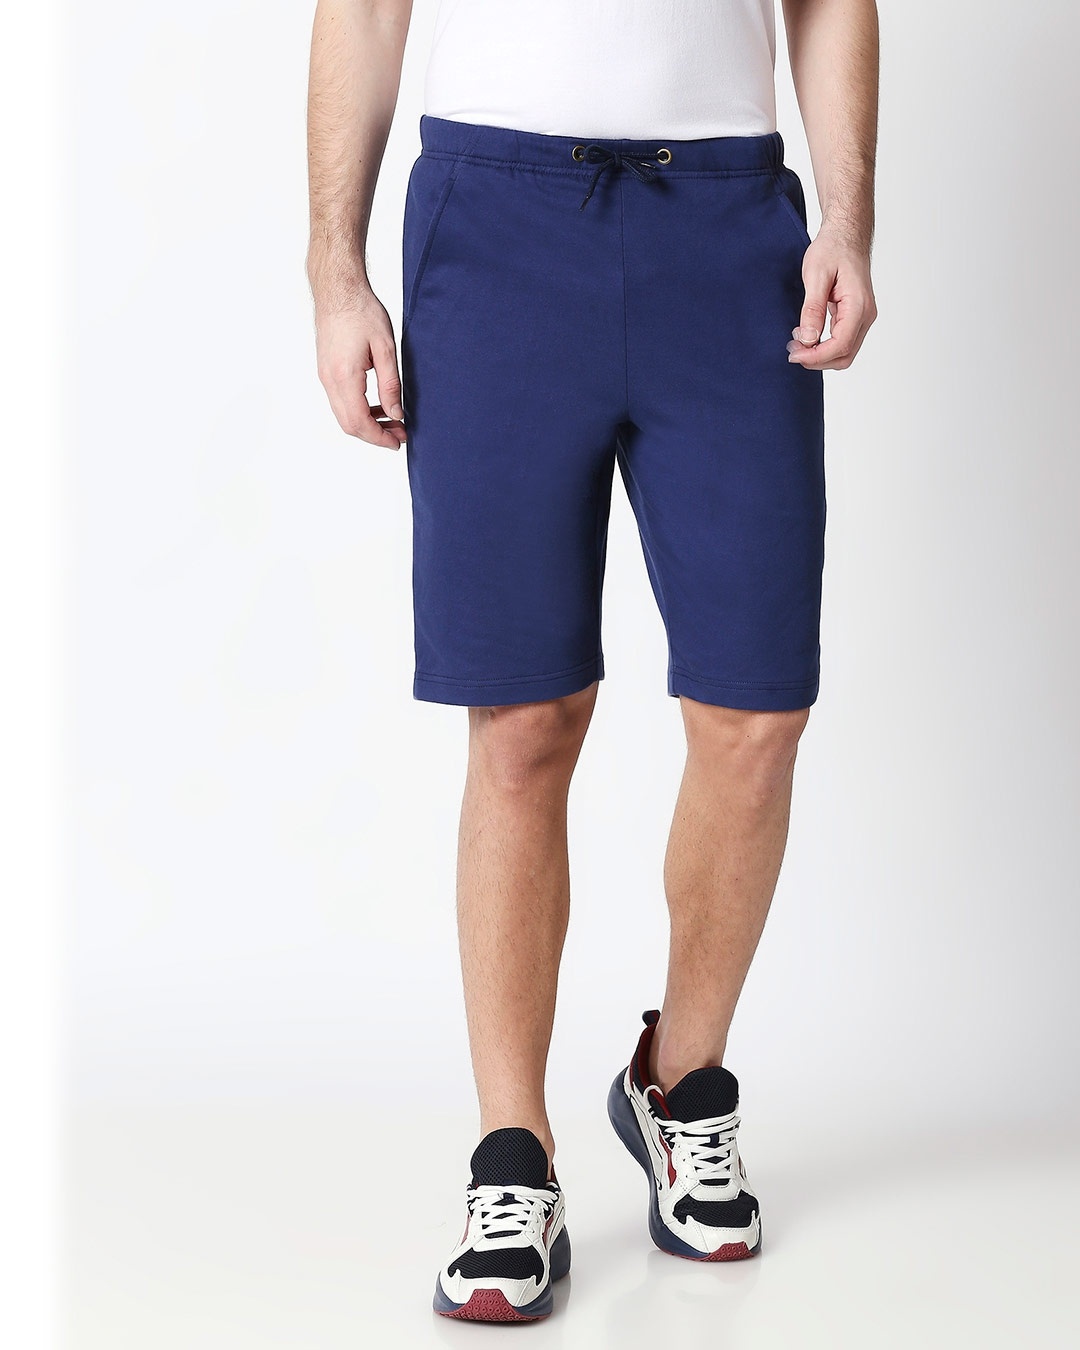 Shop Galaxy Blue Men's Casual Shorts-Front